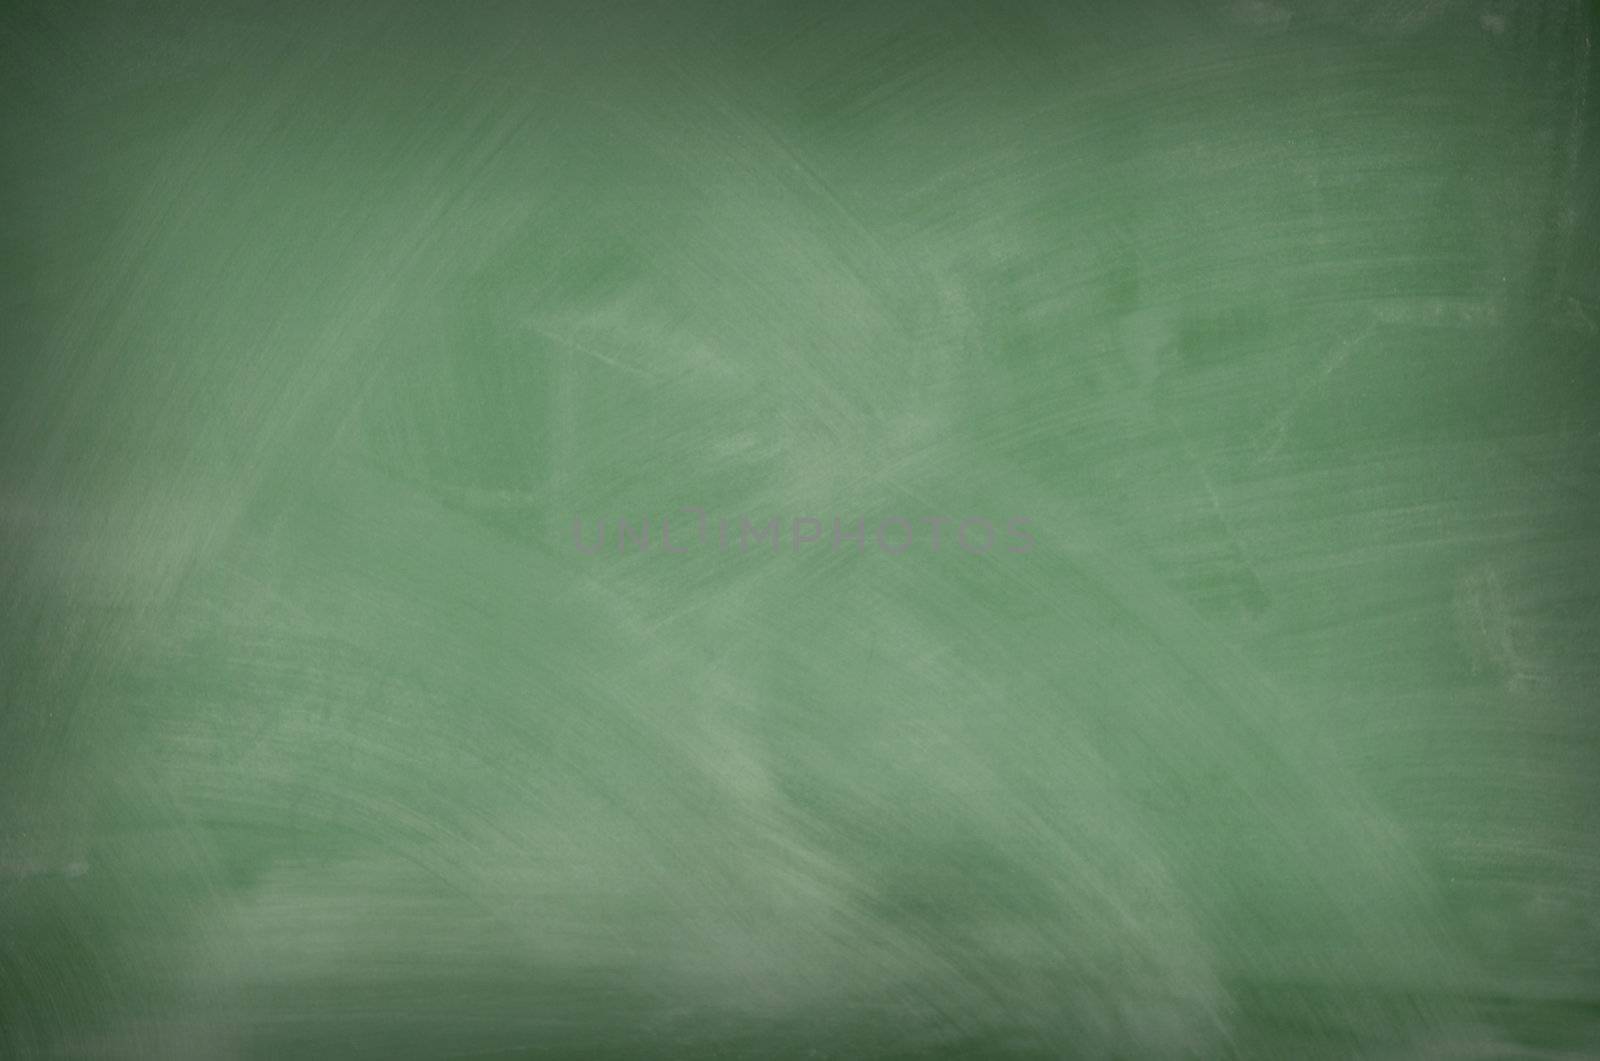 Green chalkboard with smeared chalk eraser marks